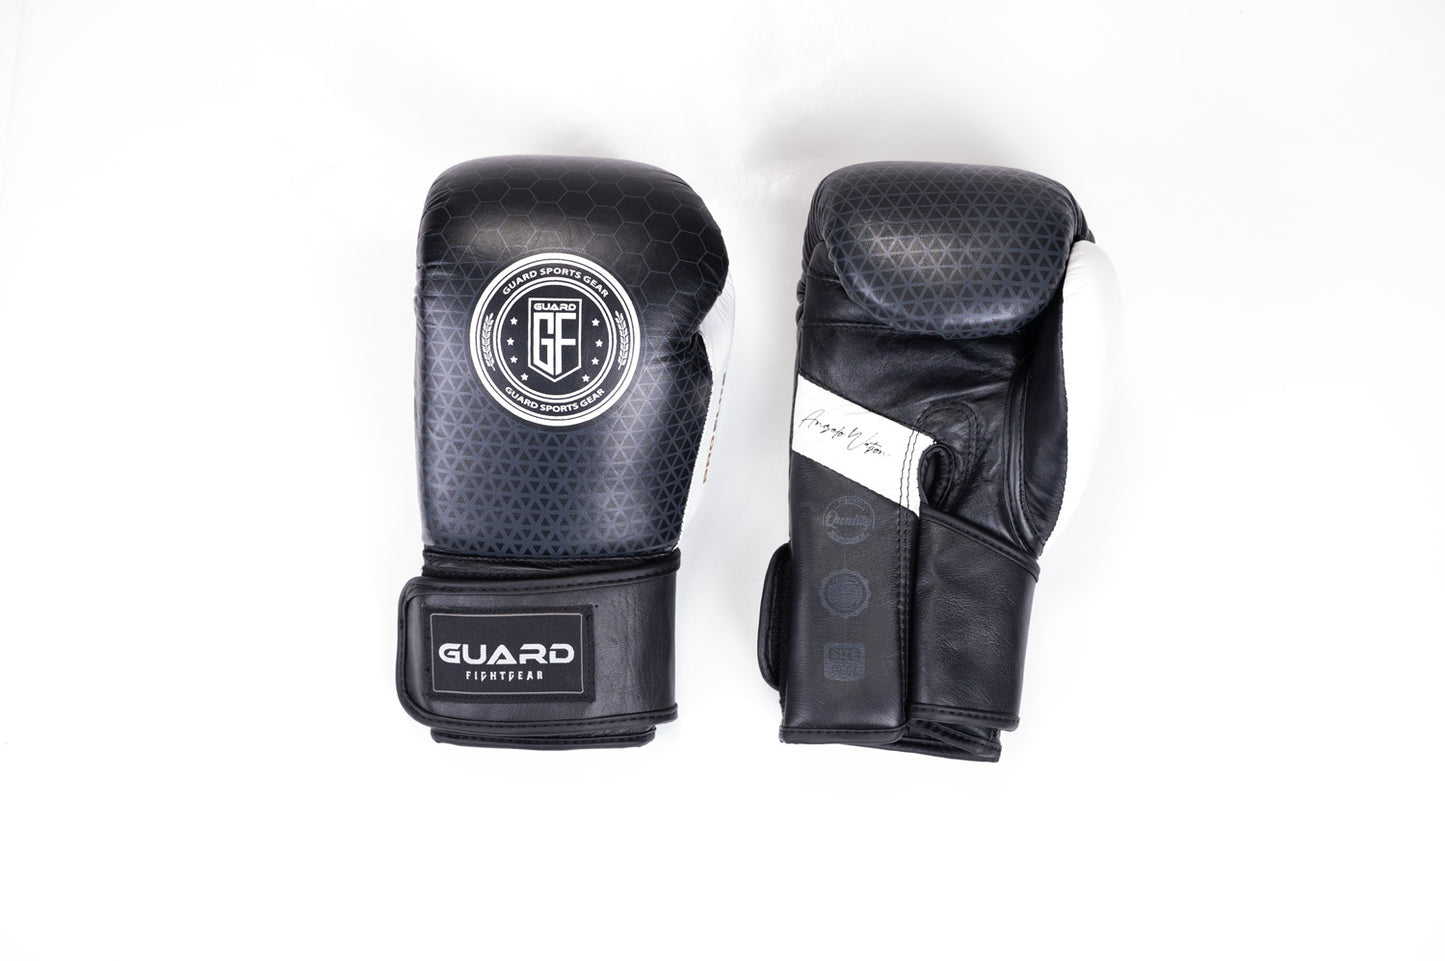 Hexa Boxing Glove